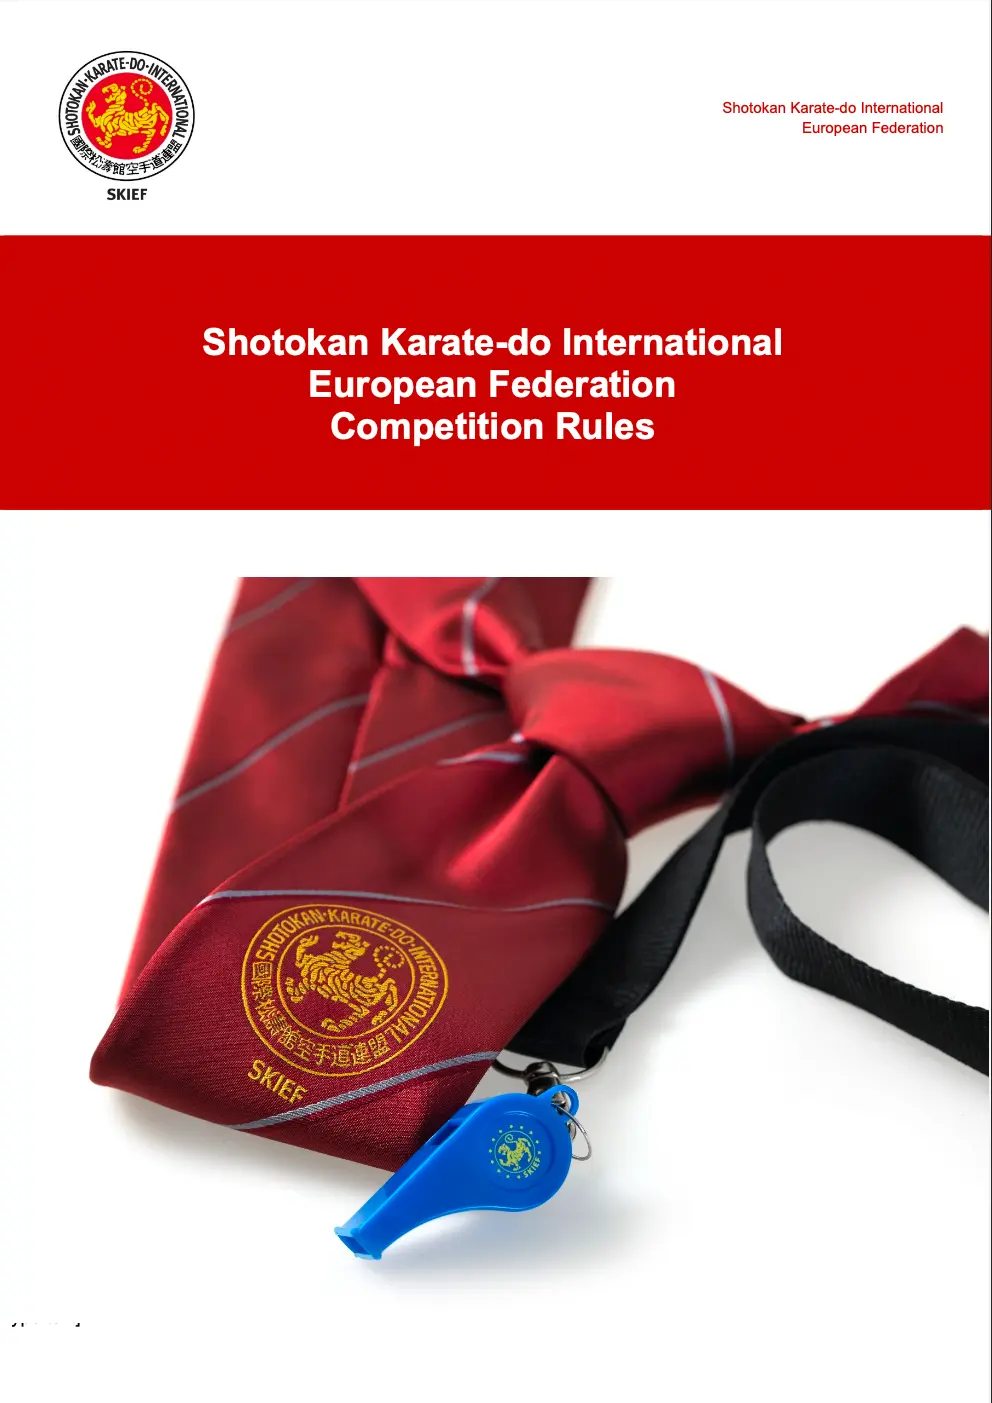 Shotokan Karate International Federation Competition Rules